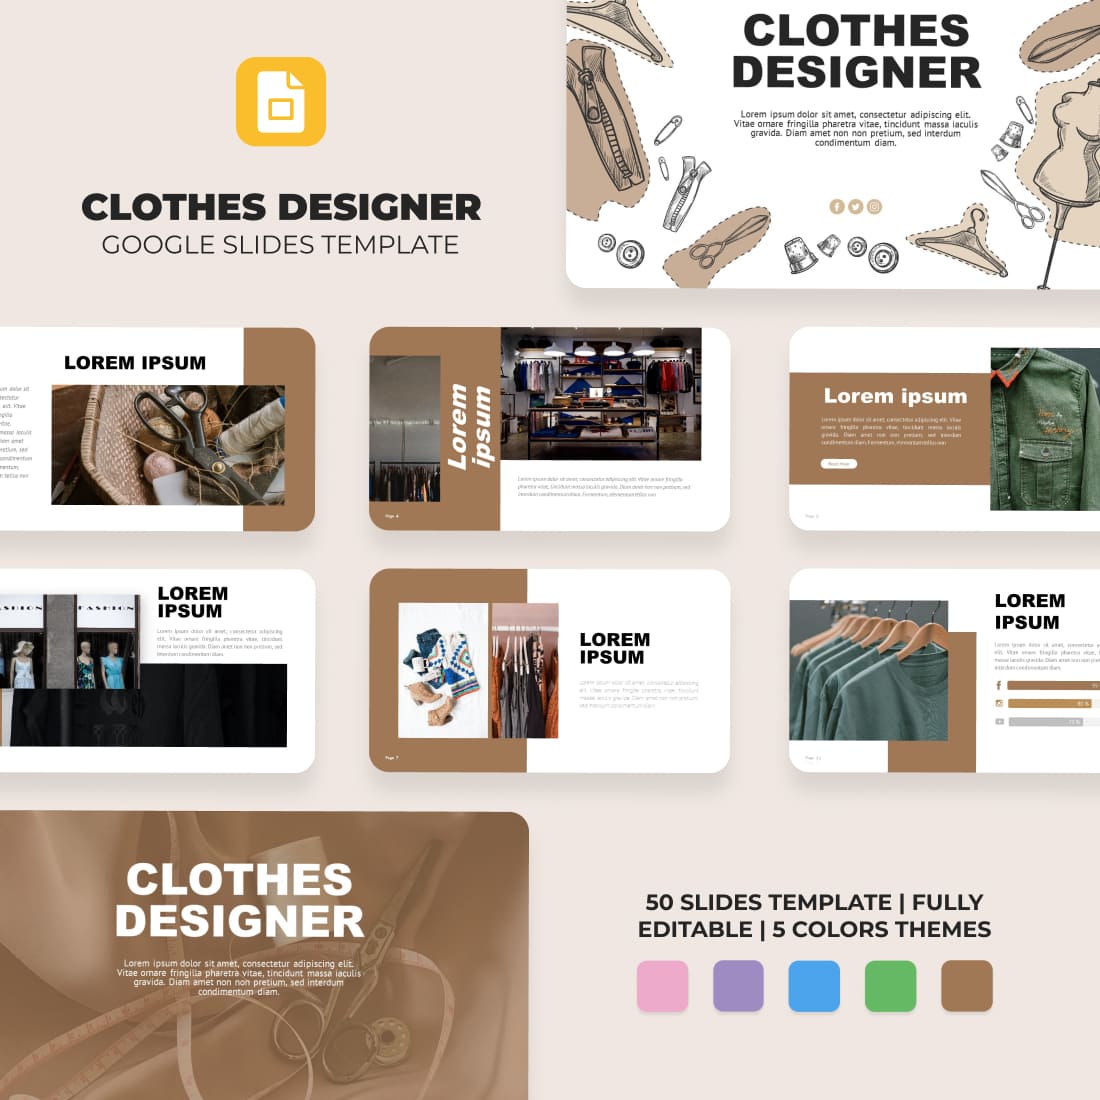 Clothes Designer Fashion Google Slides Theme cover.